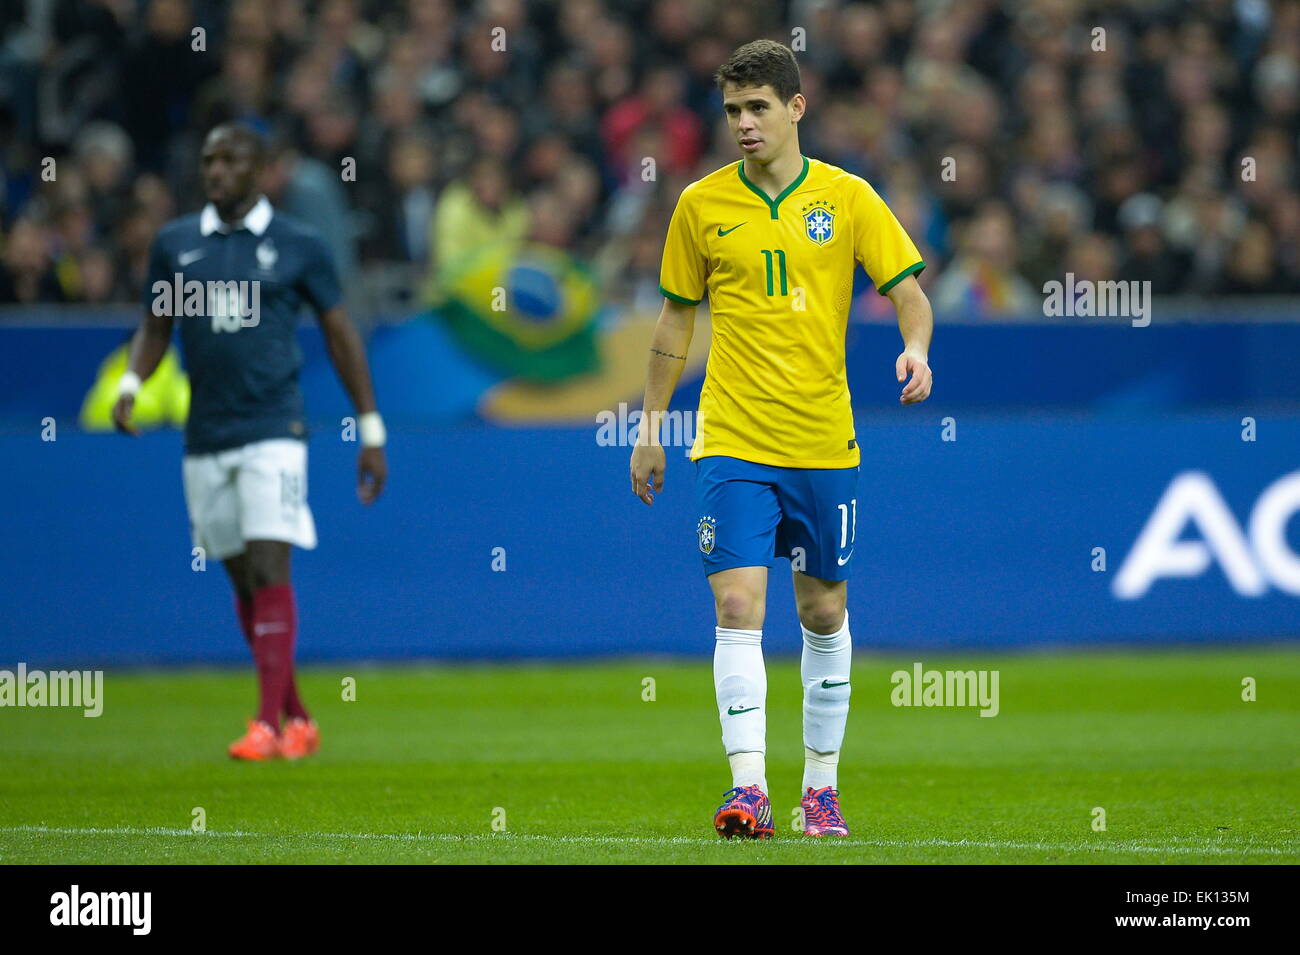 Oscar - 26.03.2015 - France / Bresil - Match Amical.Photo : Andre Ferreira / Icon Sport Stock Photo